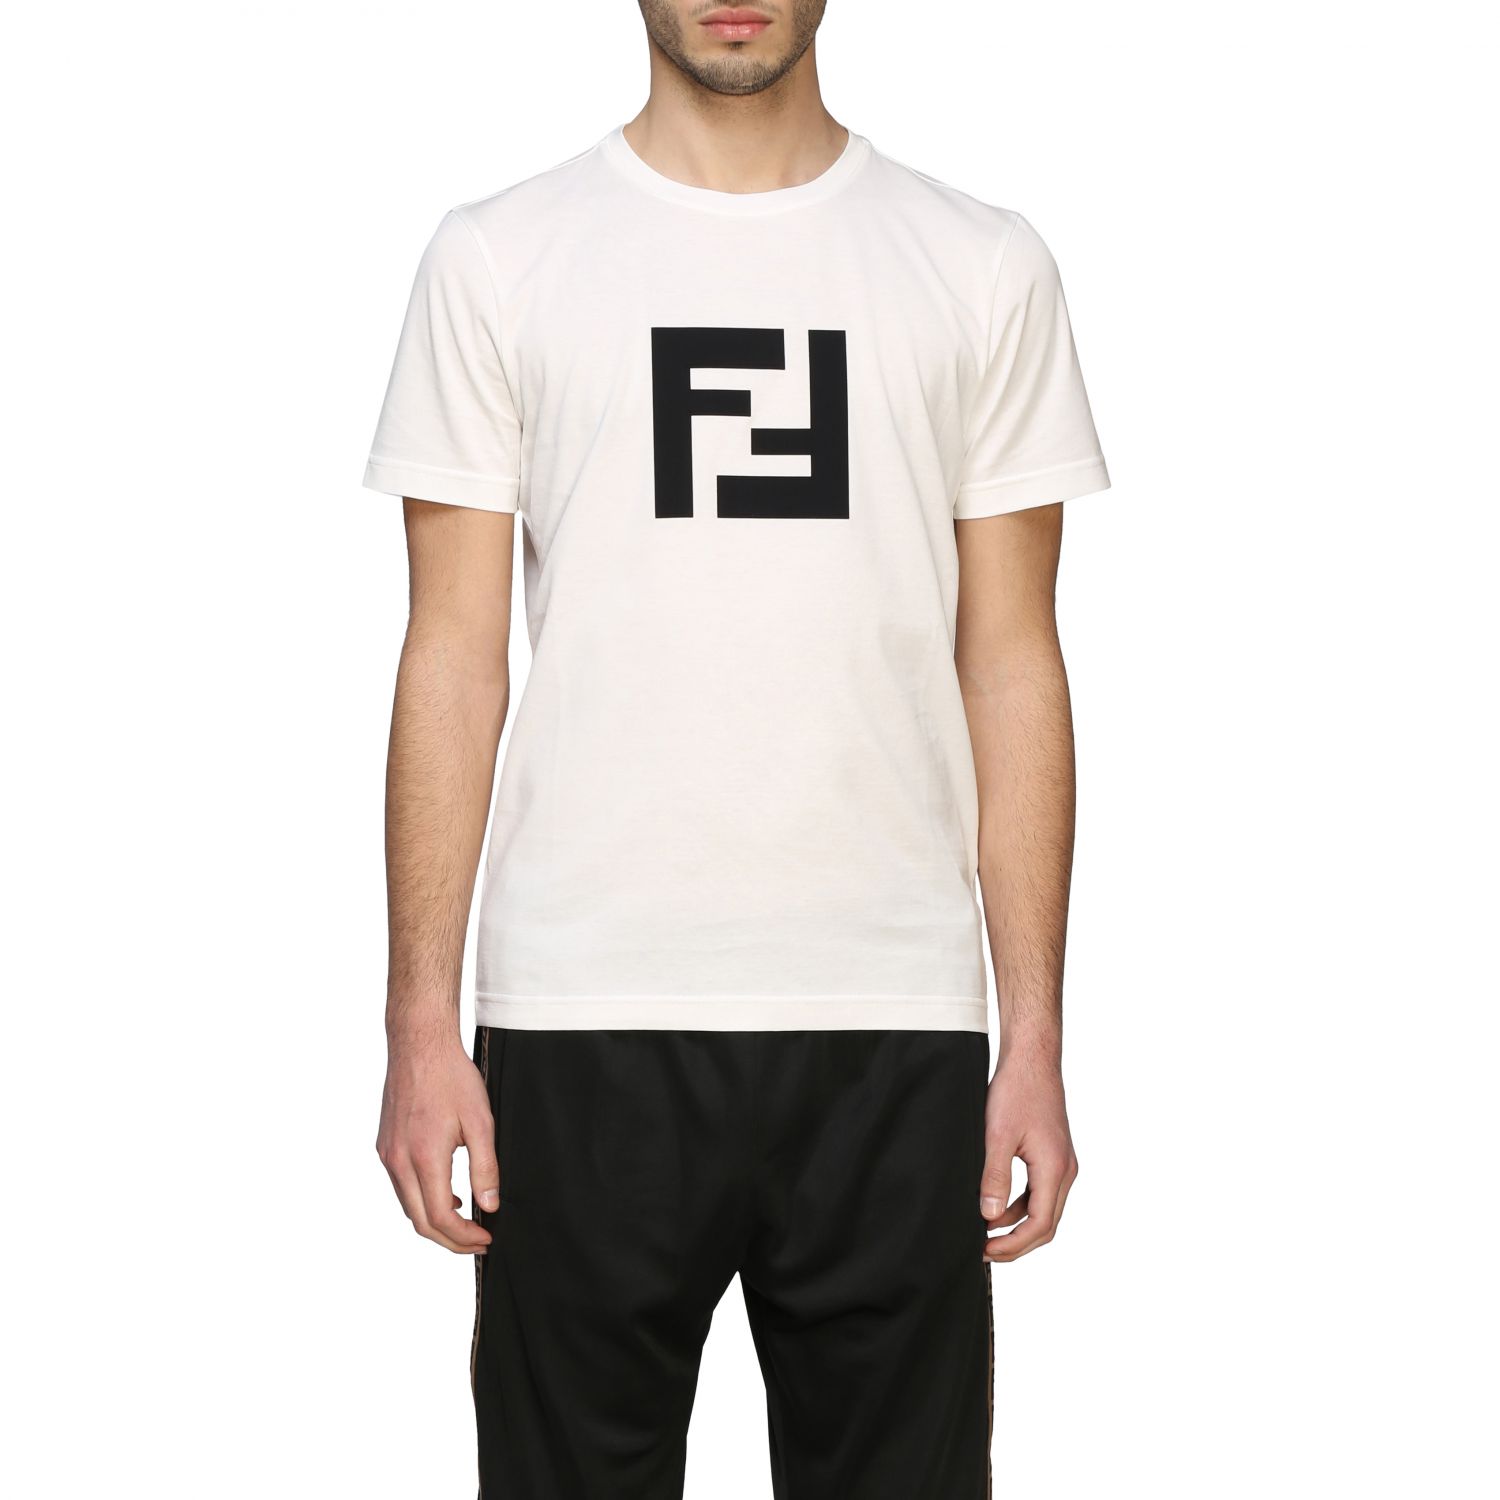 FENDI: crew-neck t-shirt with FF monogram - White | Fendi t-shirt ...